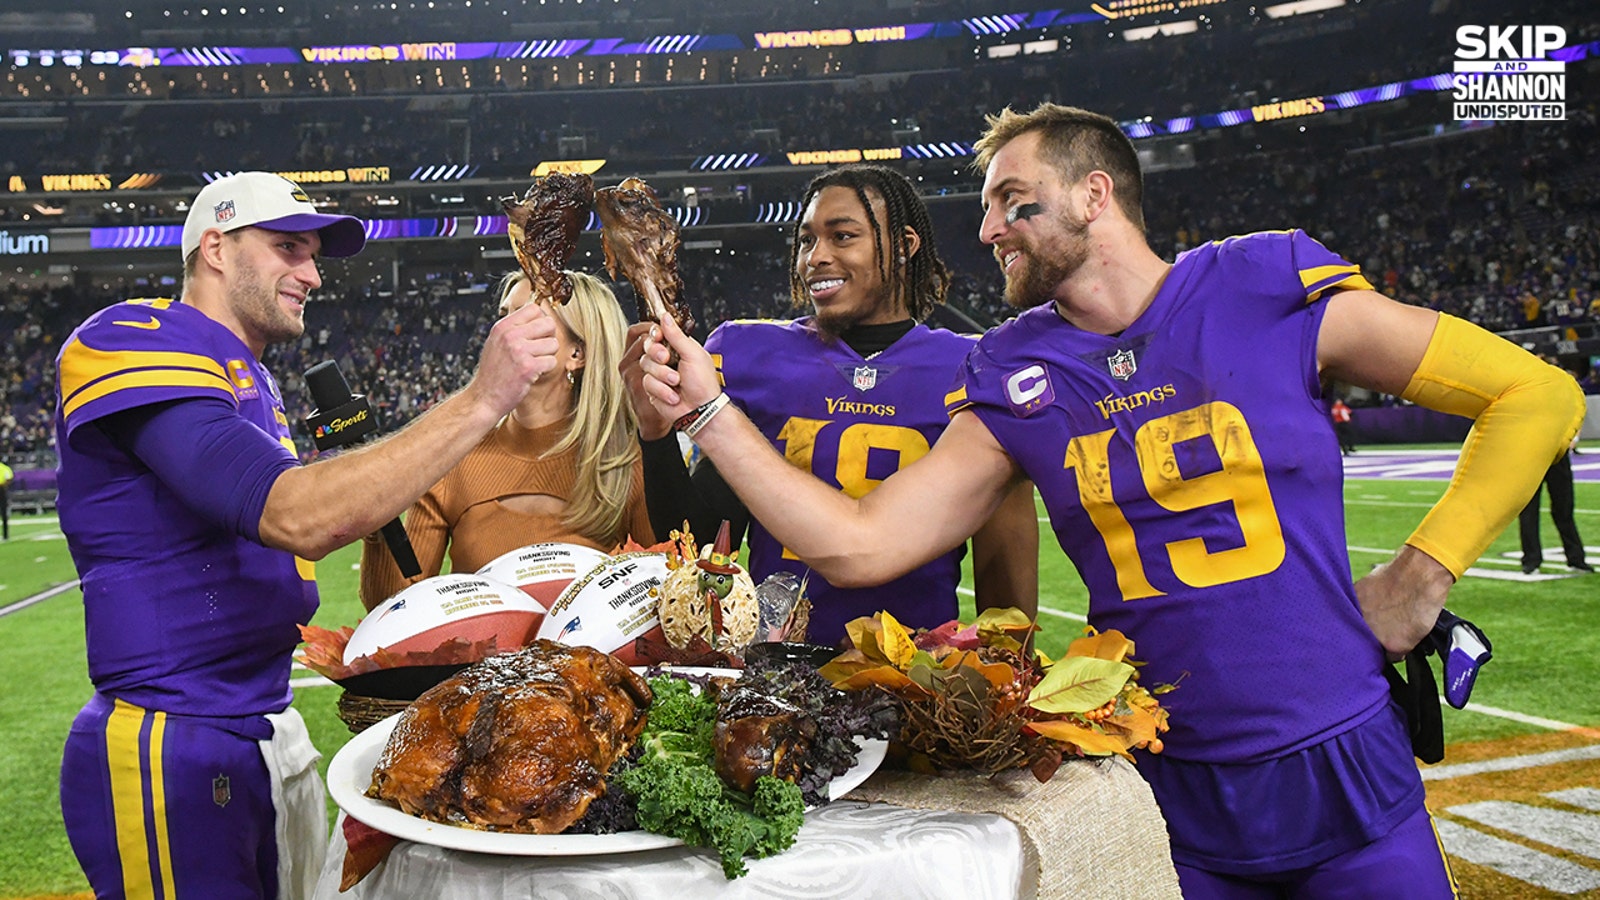 Vikings defeat Patriots 33-26 on Thanksgiving